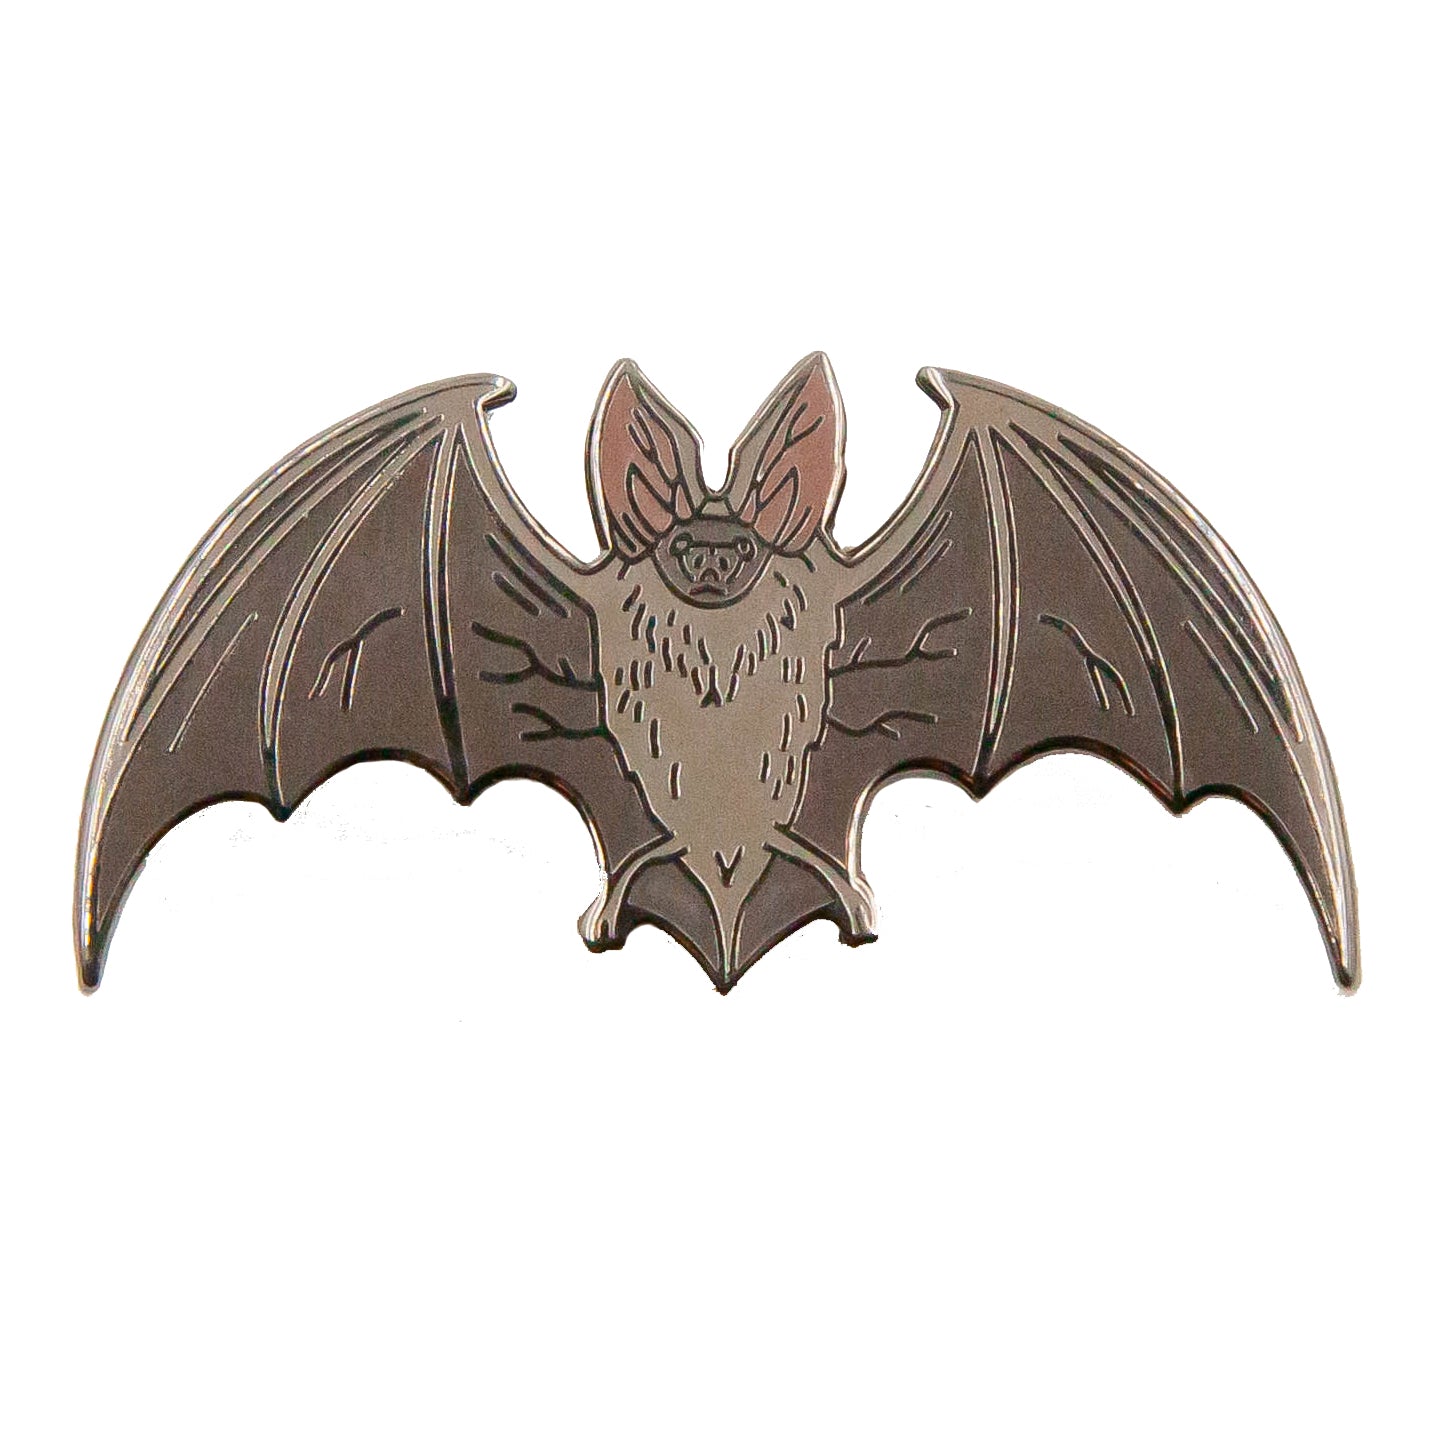 Enamel Pin - Bat - Natural Values